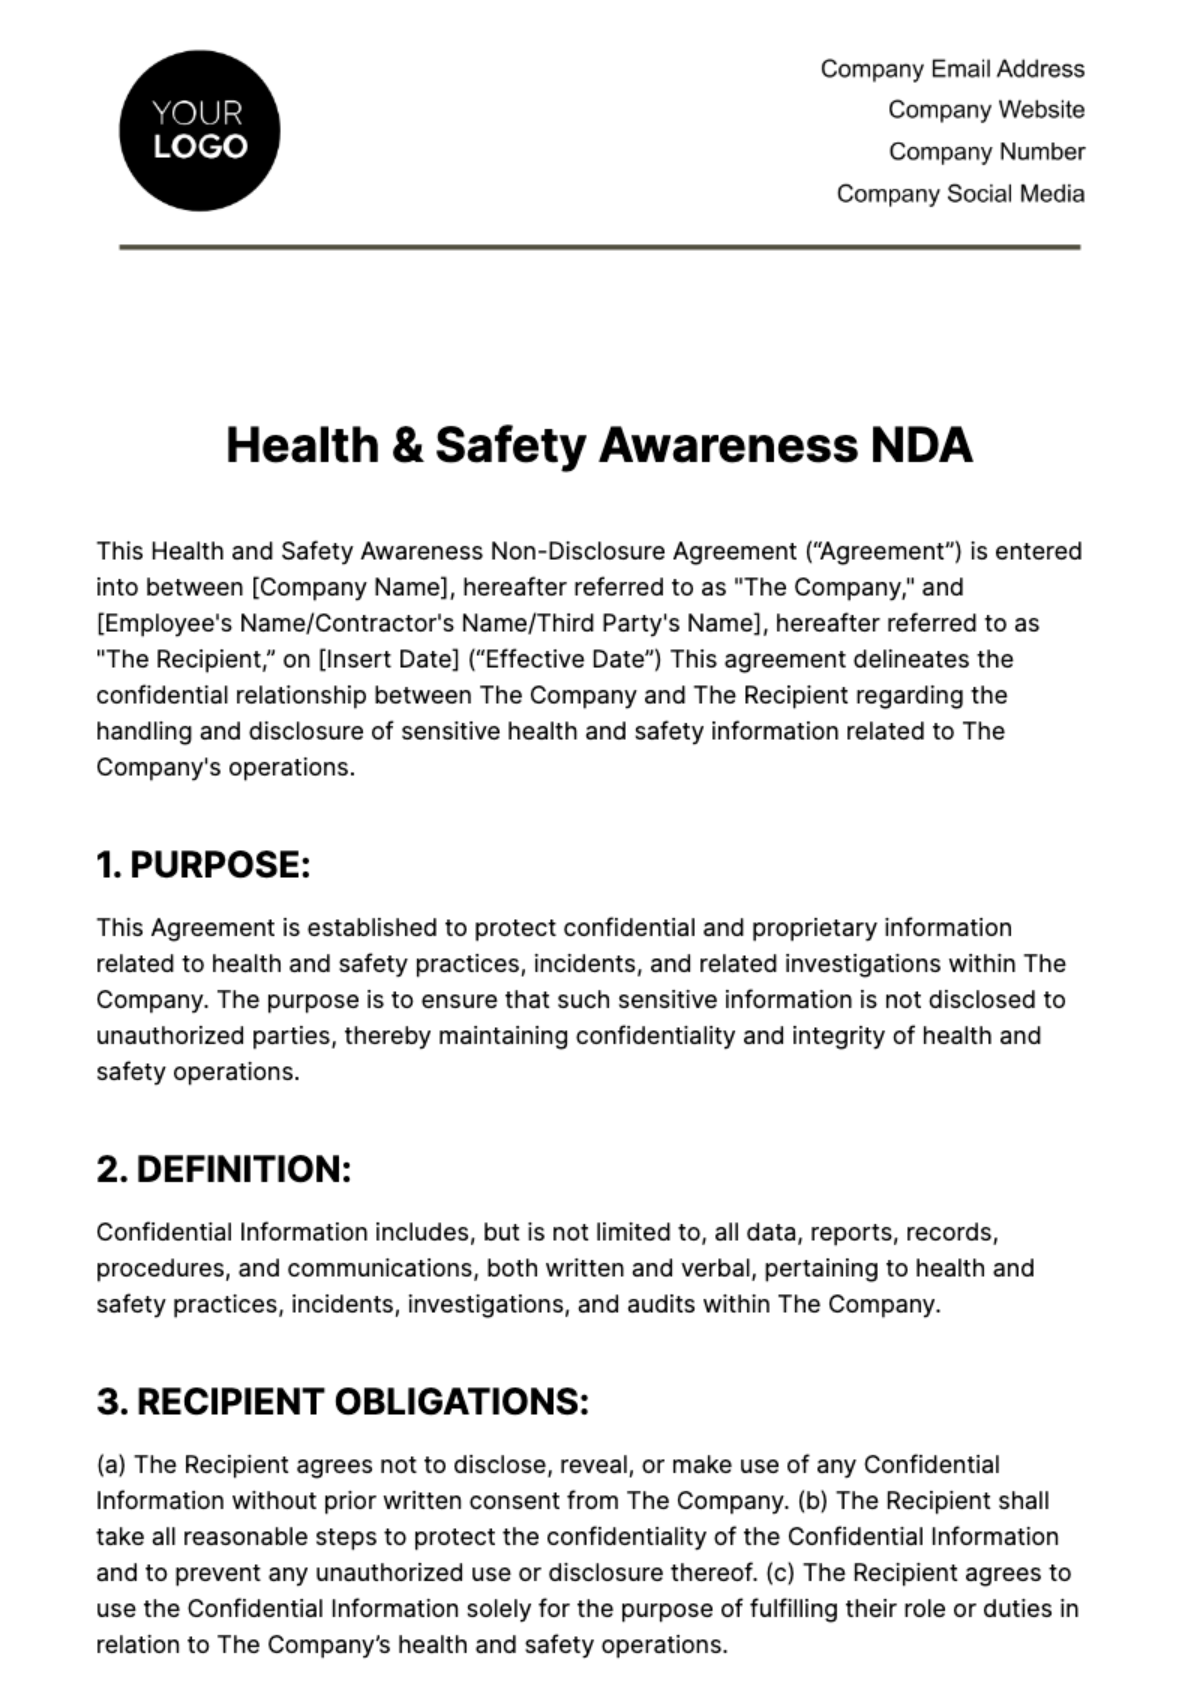 Free Health & Safety Awareness NDA Template